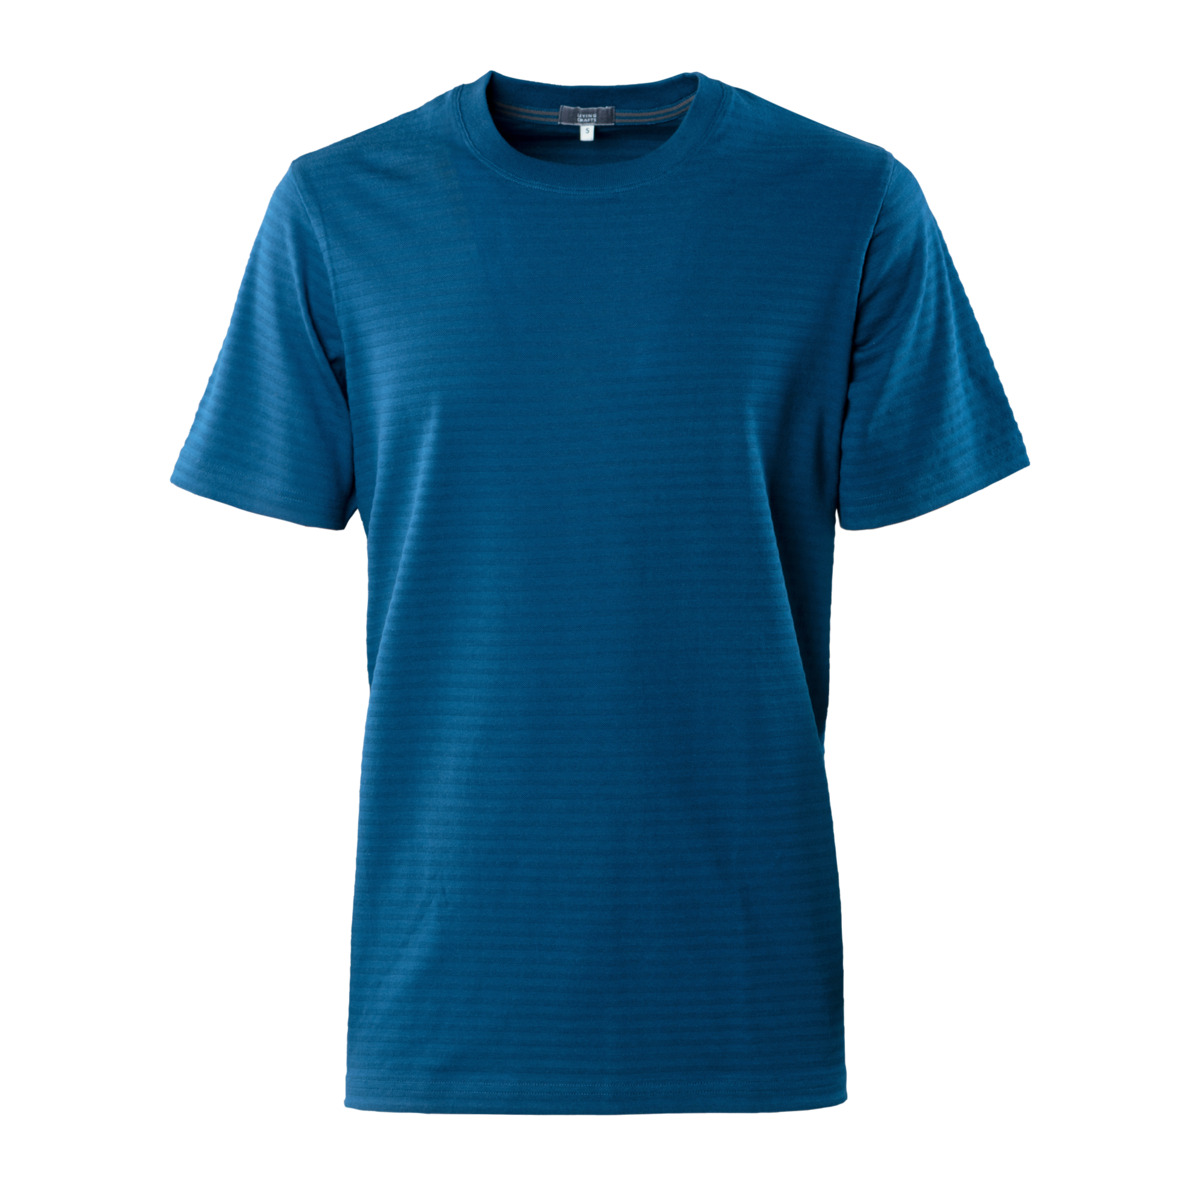 Blue T-shirt, NICLAS